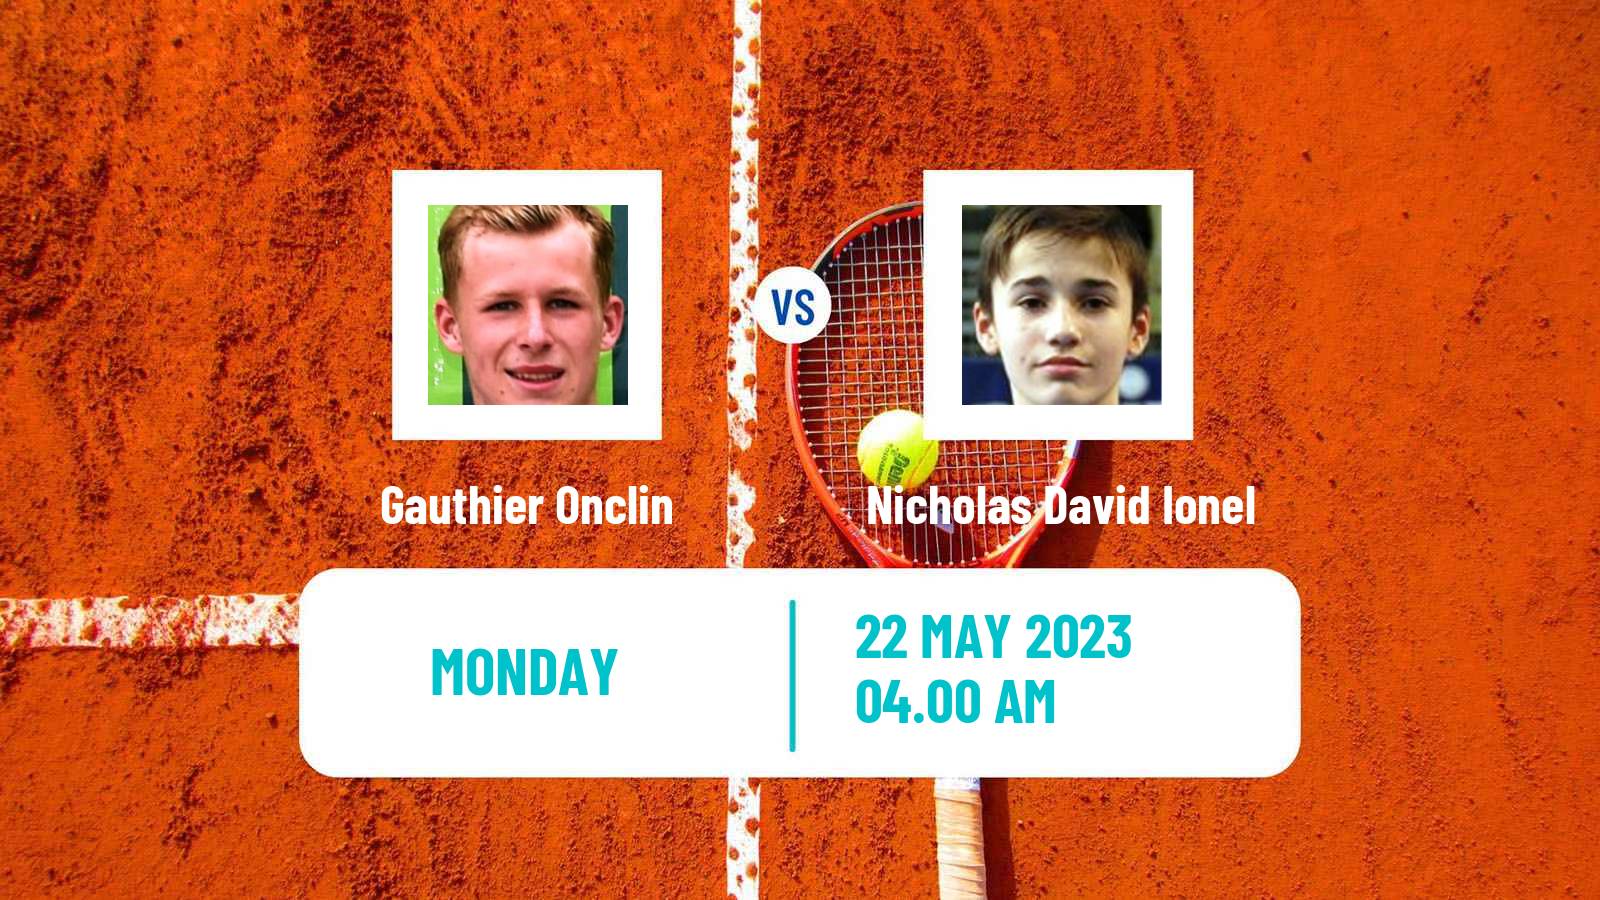 Tennis ATP Roland Garros Gauthier Onclin - Nicholas David Ionel